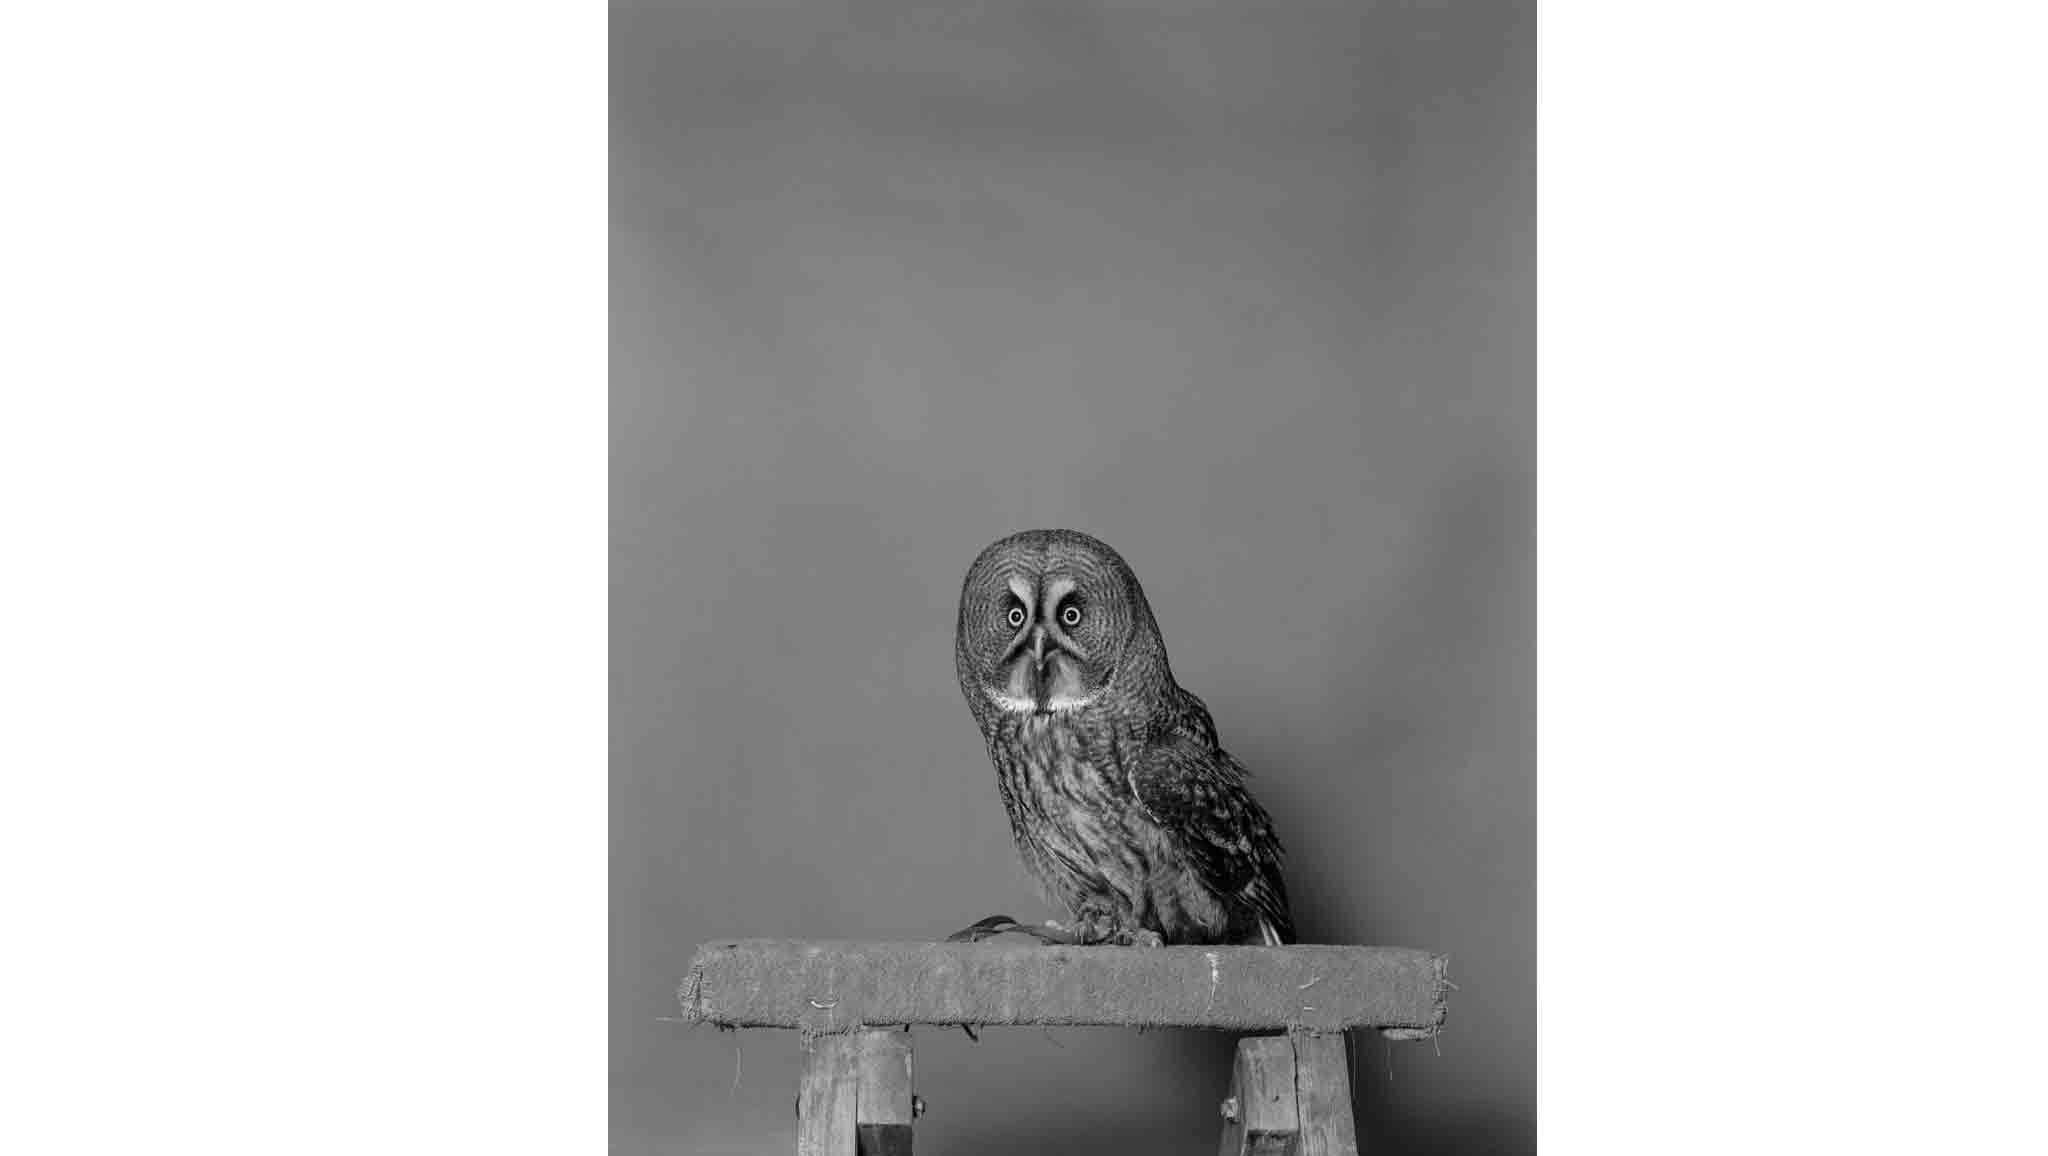 bohemian grove owl